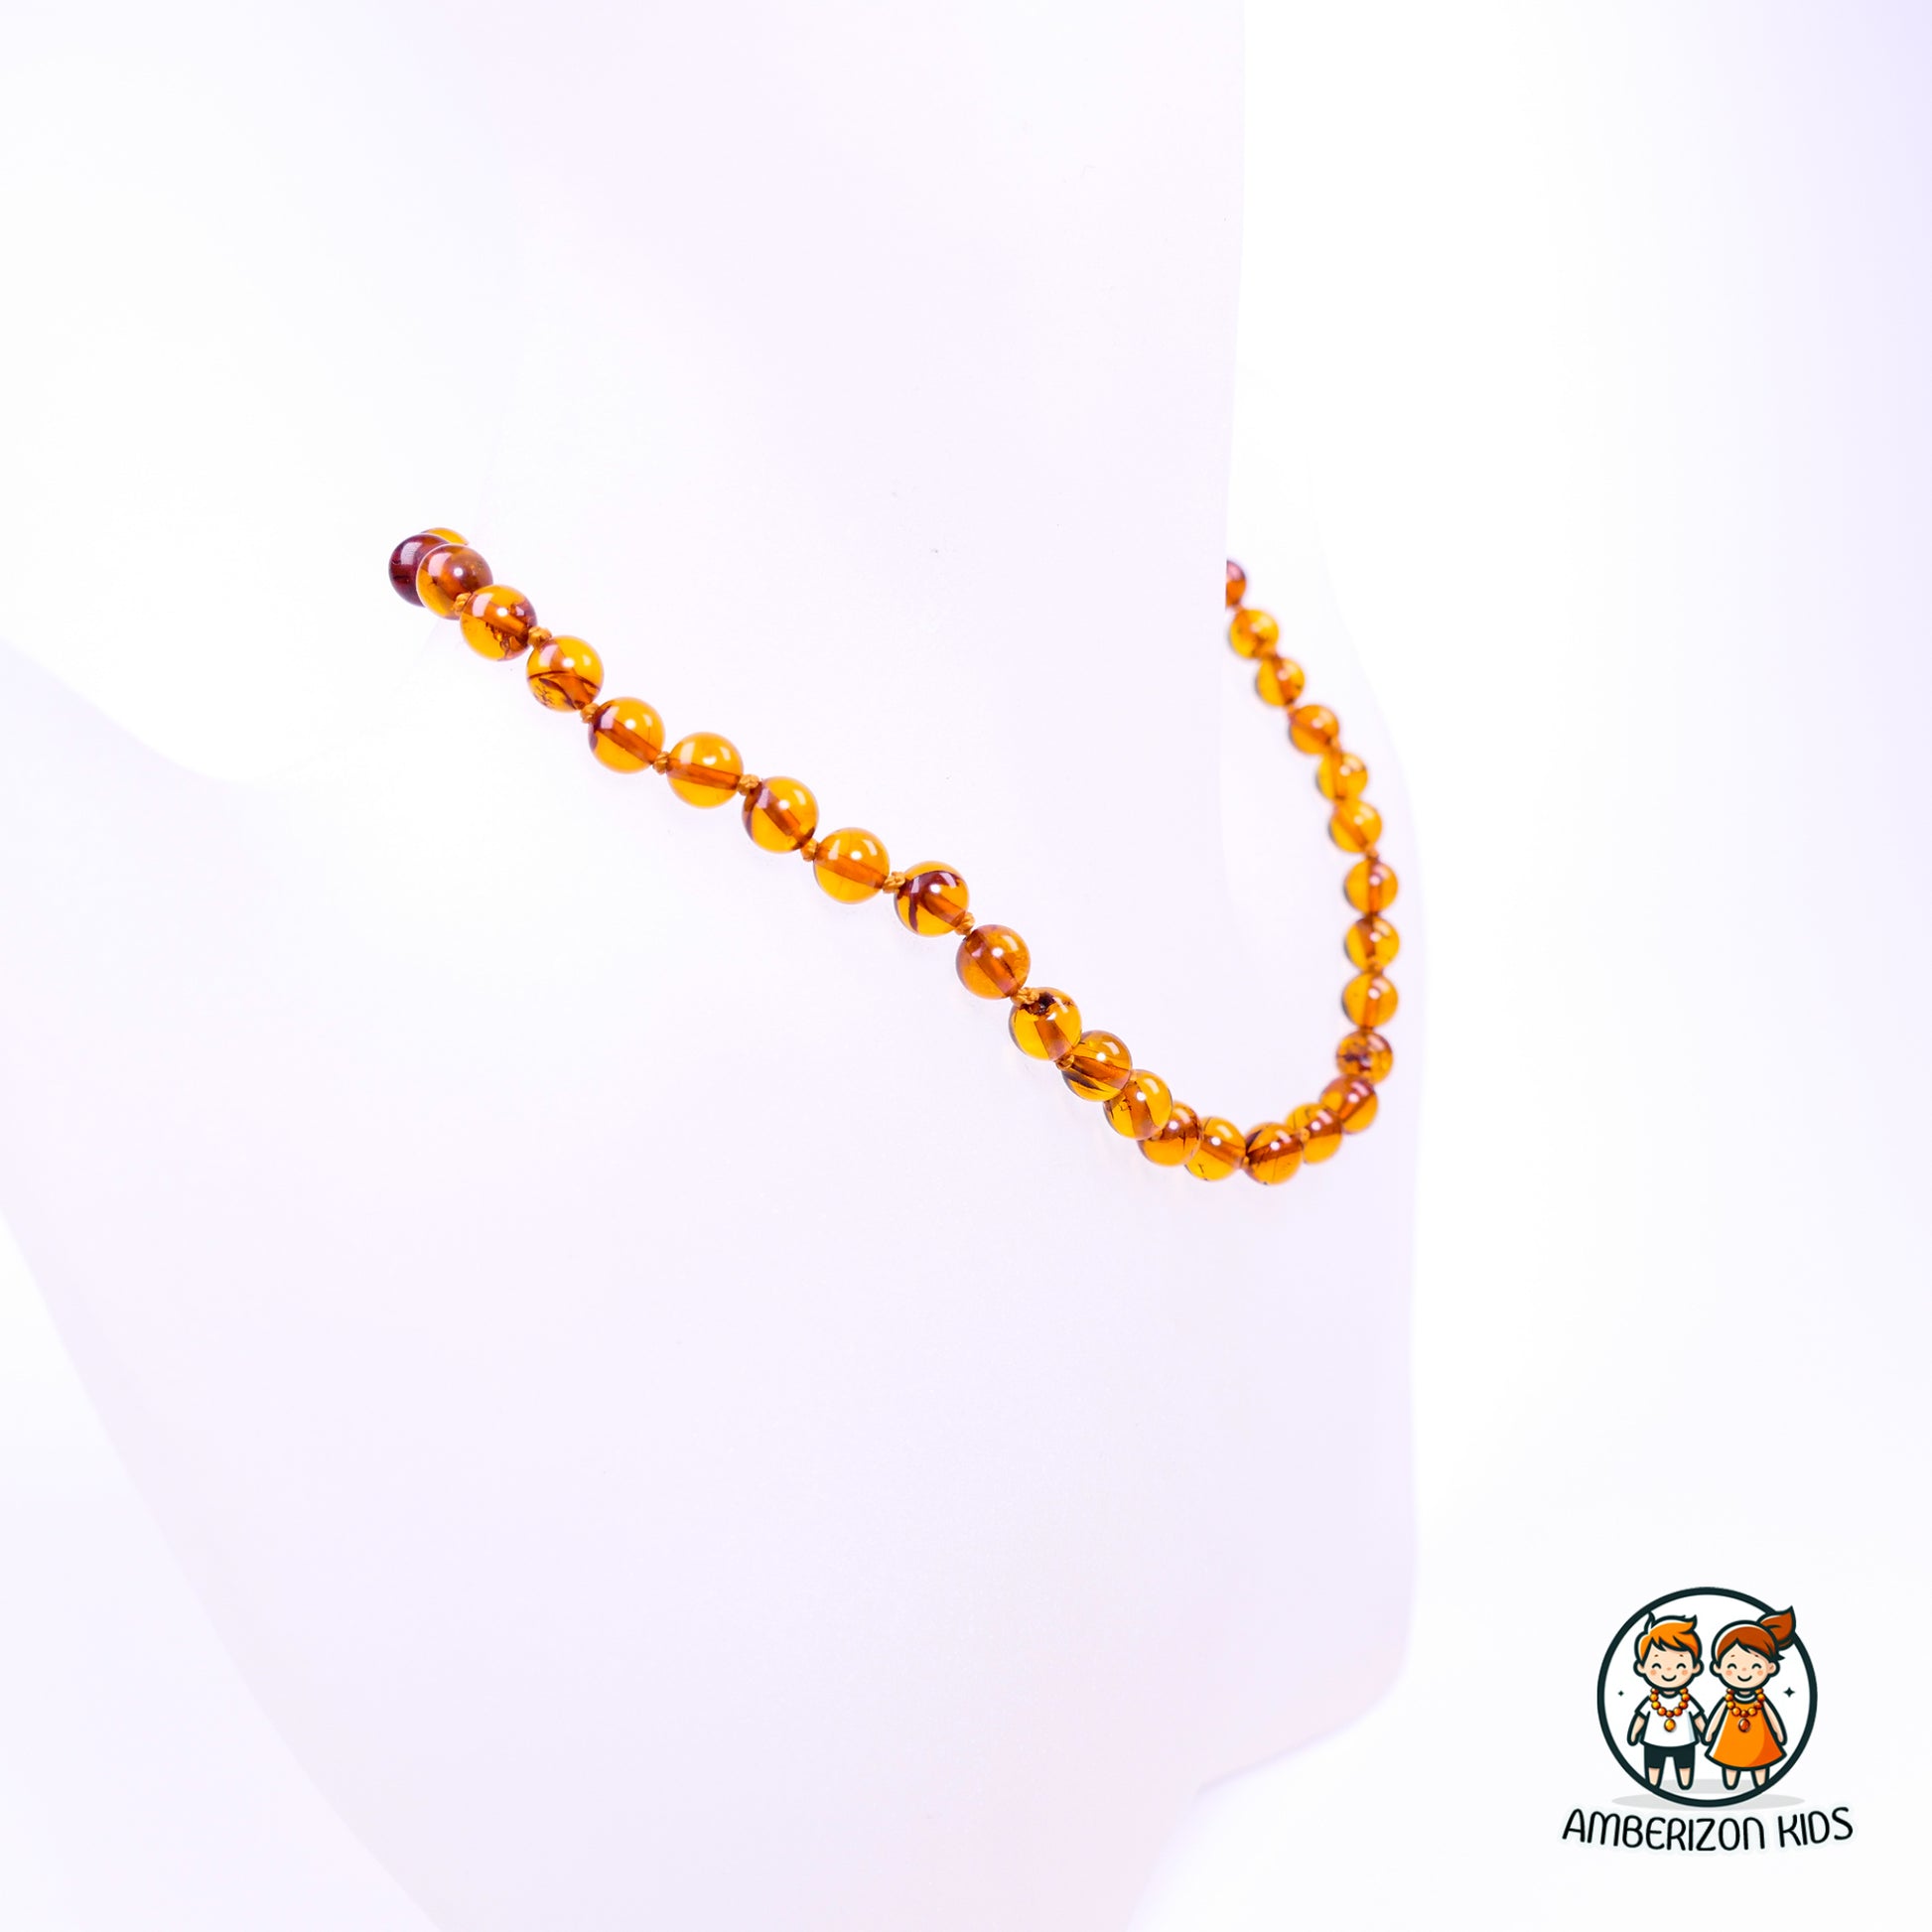 Round amber bead premium baby necklace - Cognac round balls